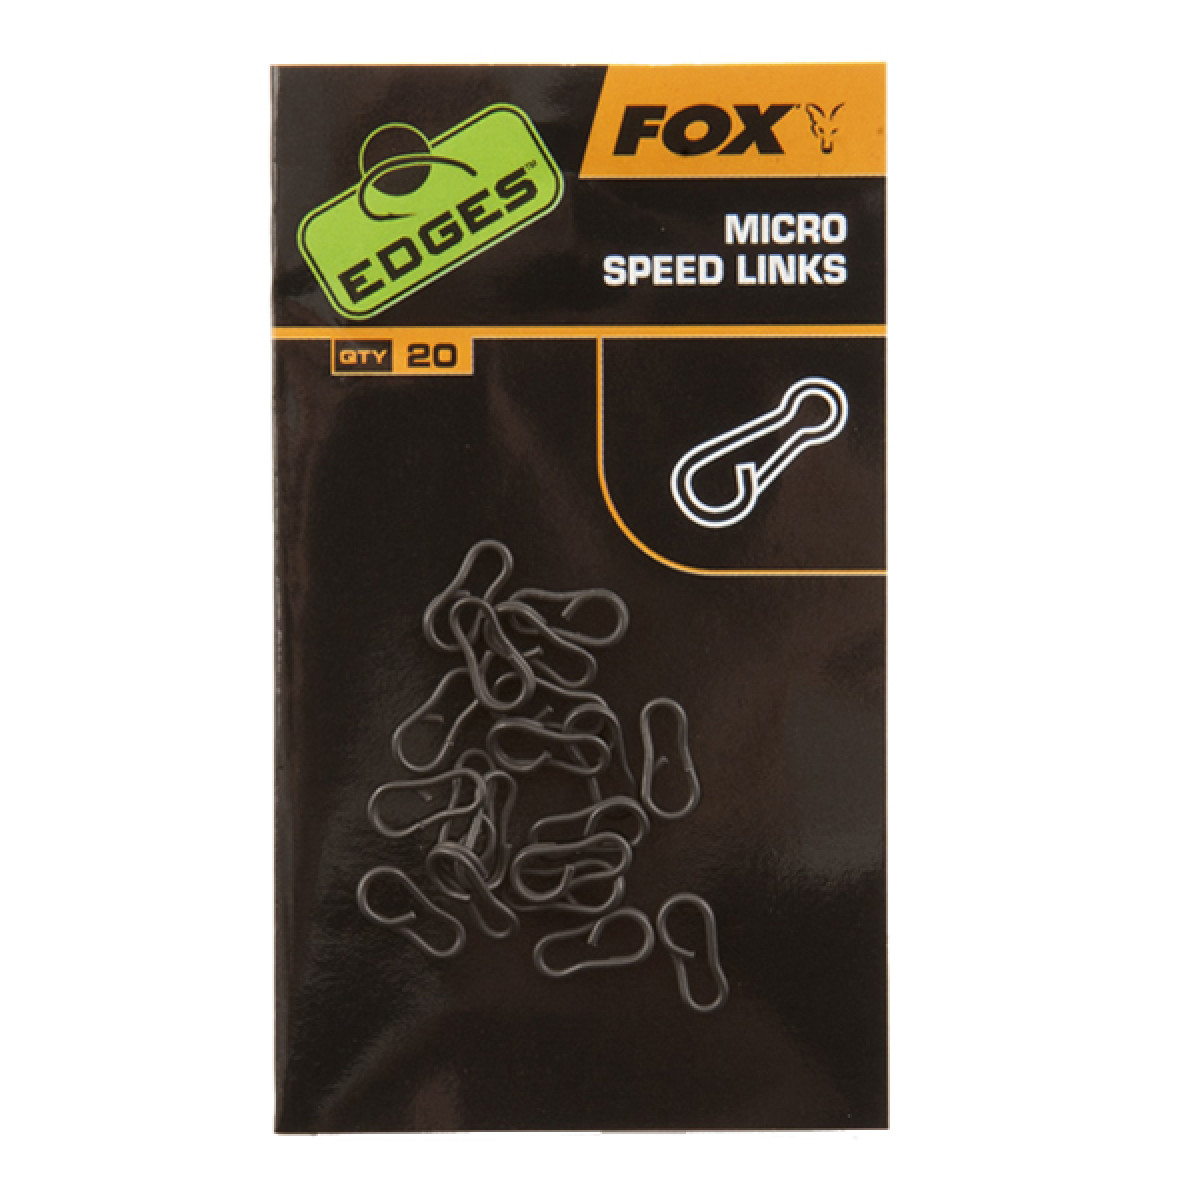 FOX MICRO SPEED LINKS